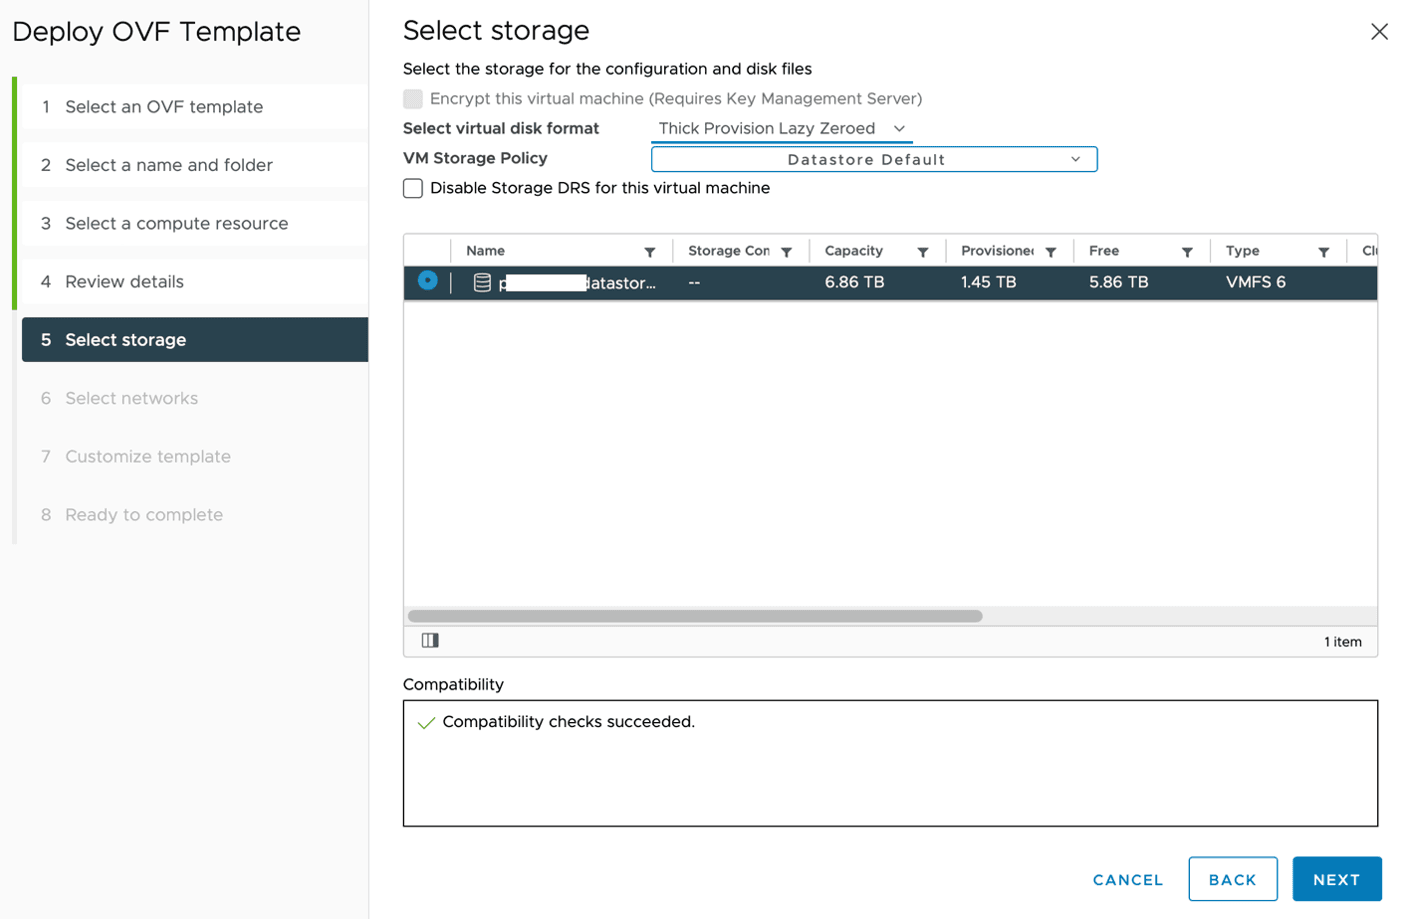 Figure: Select storage page